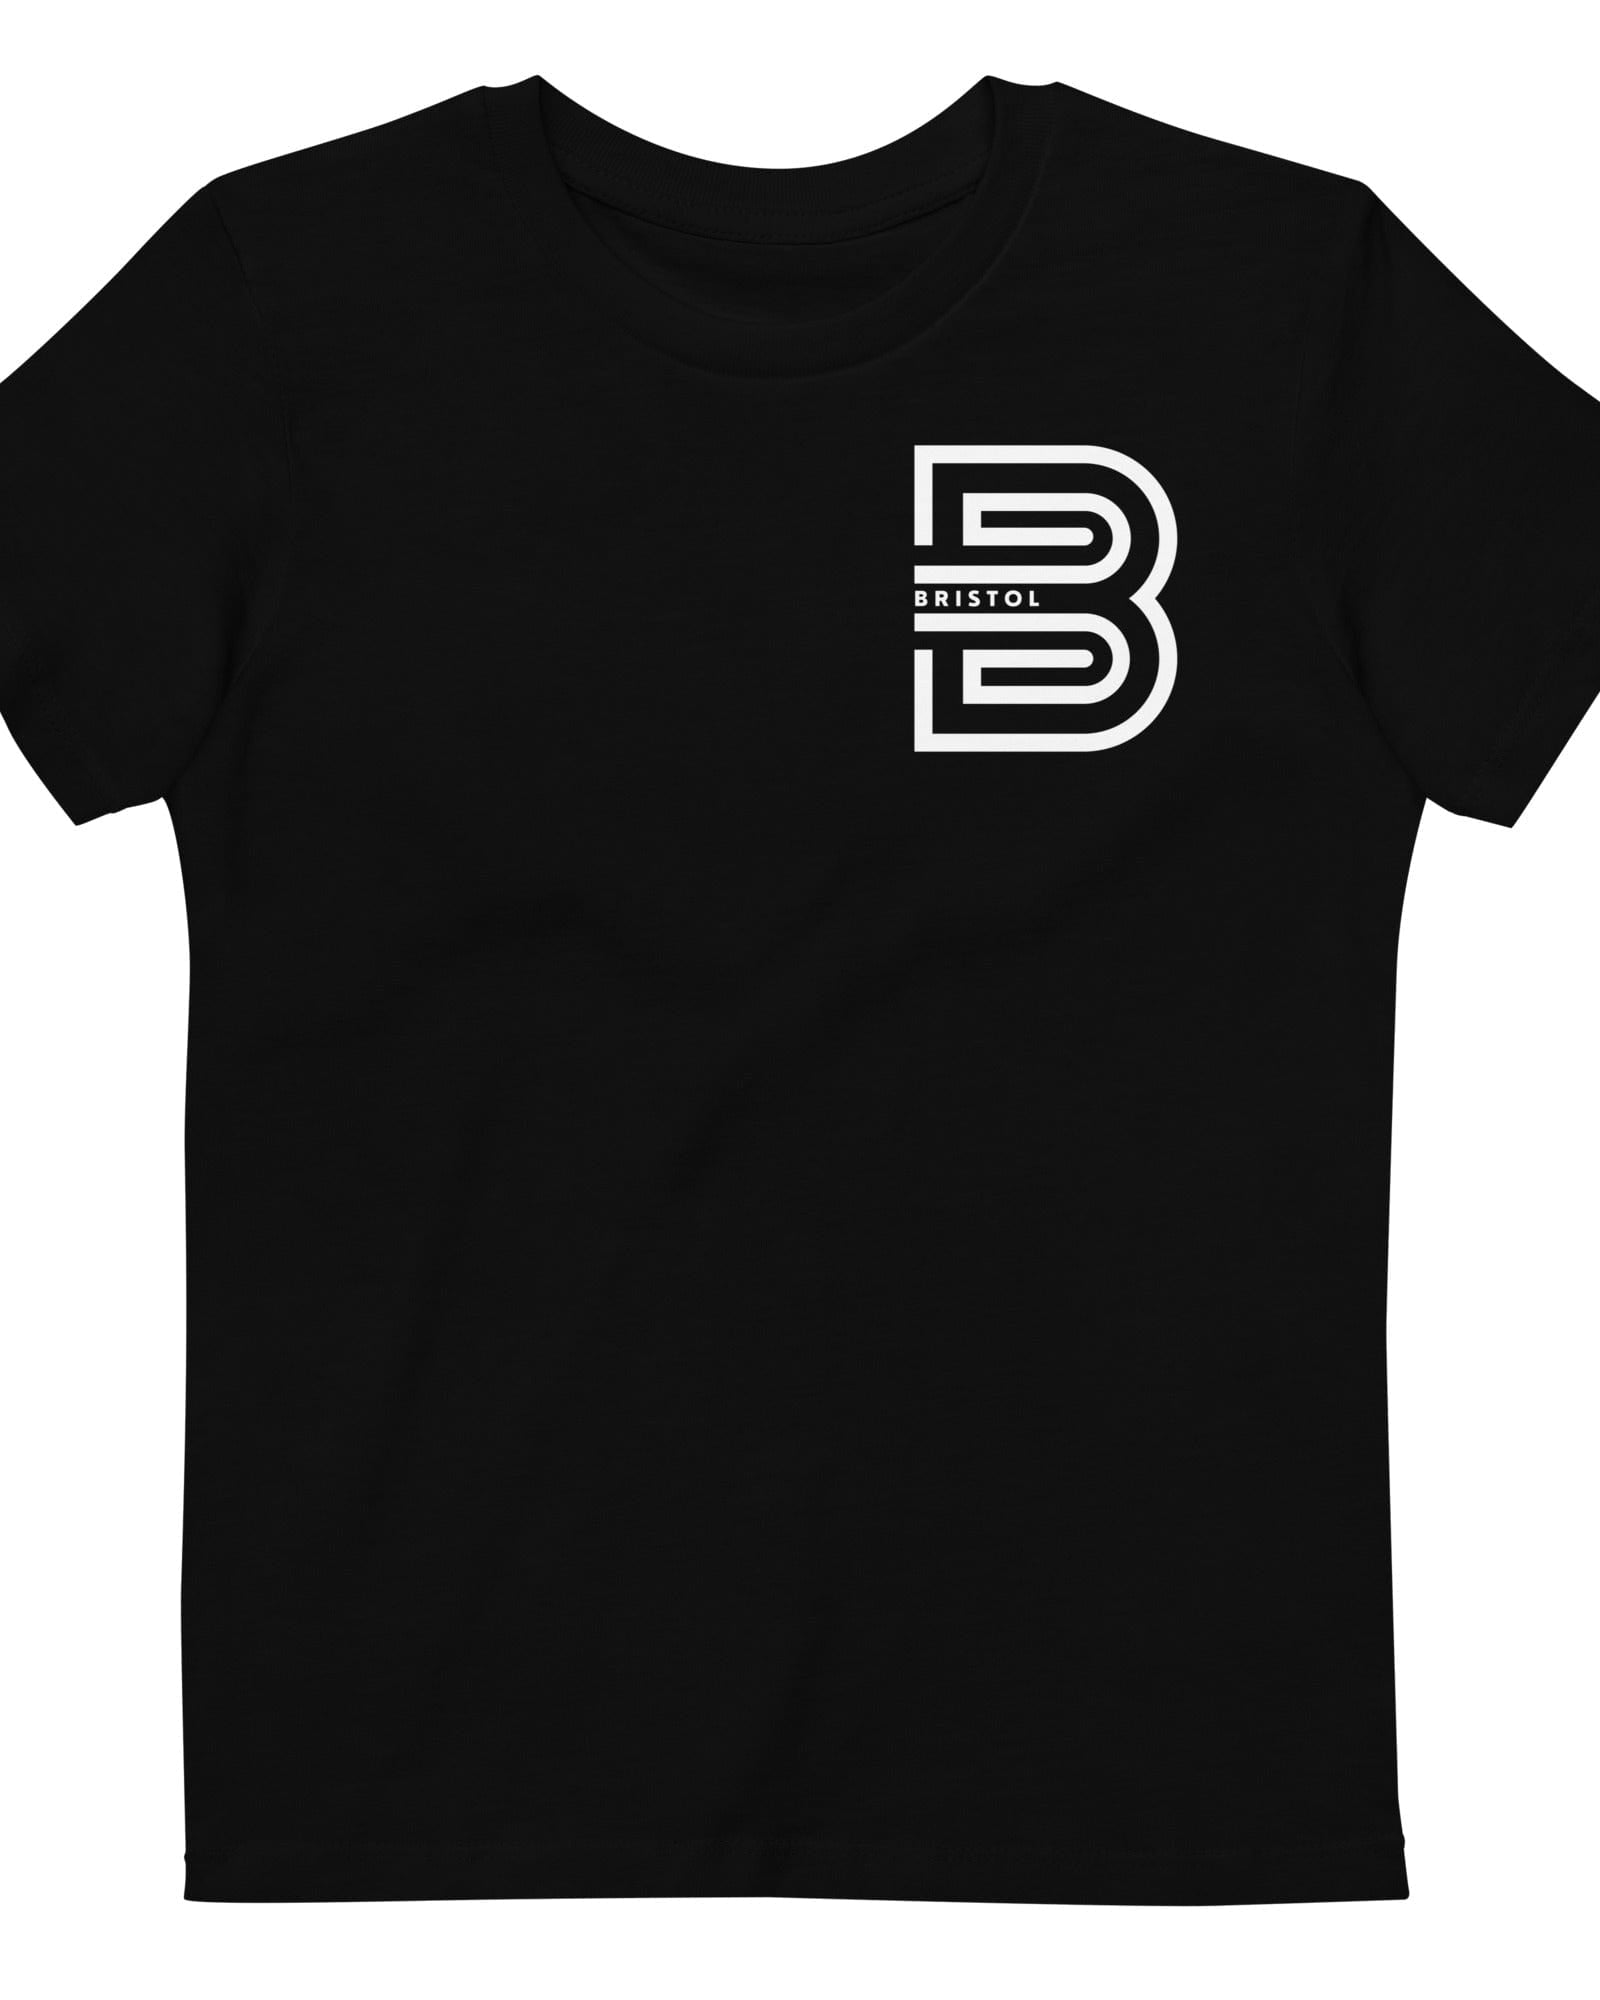 Bristol B Kids T-shirt | Organic Cotton Black / 3-4 Shirts & Tops Jolly & Goode